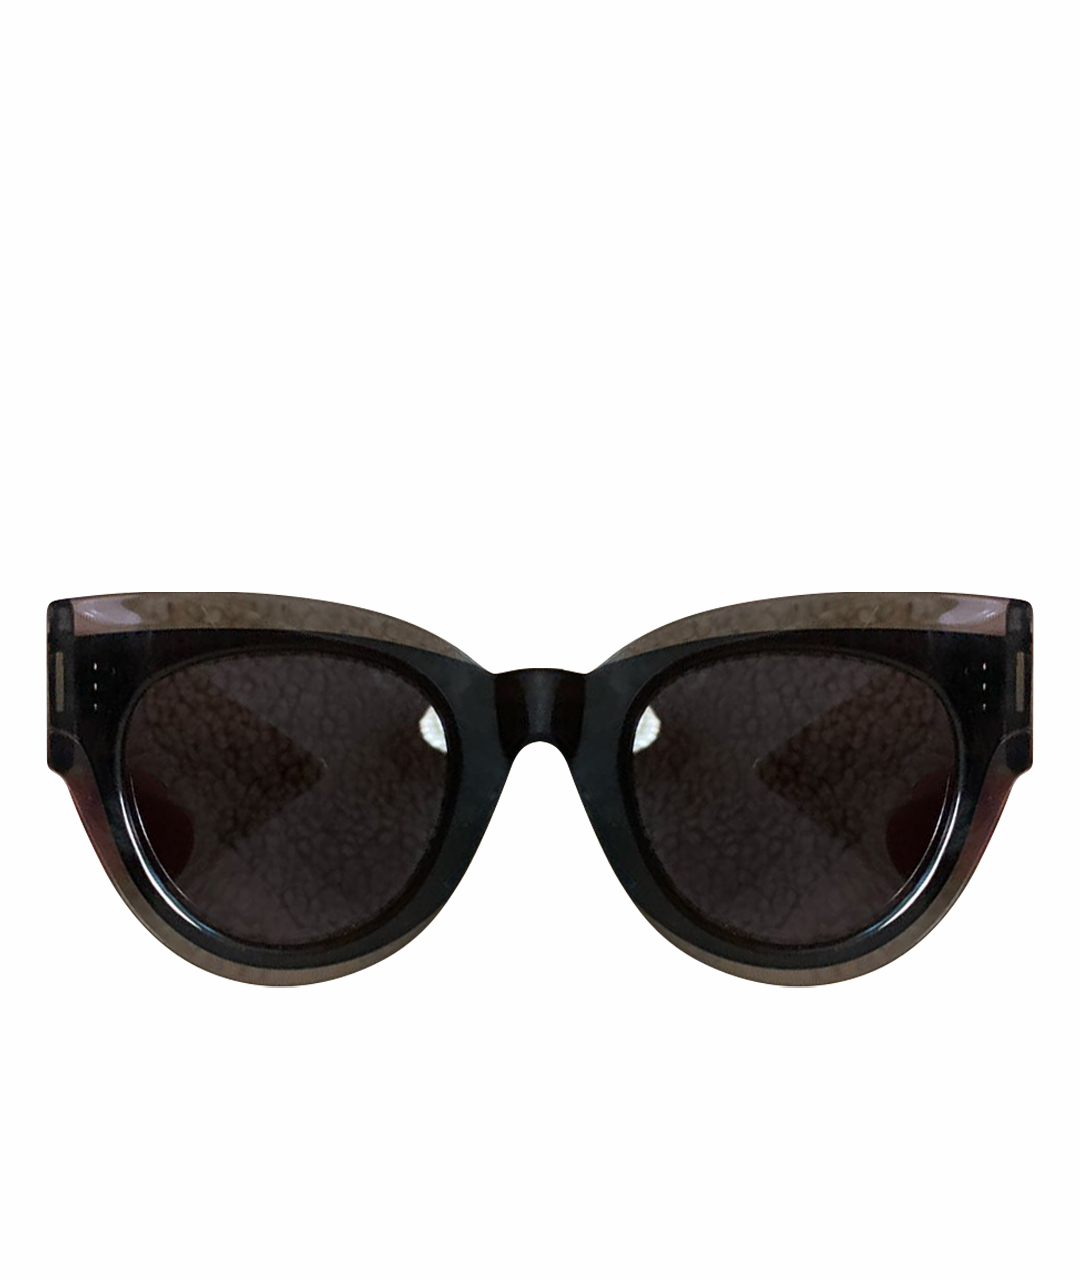 CELINE PRE-OWNED Черные солнцезащитные очки, фото 1